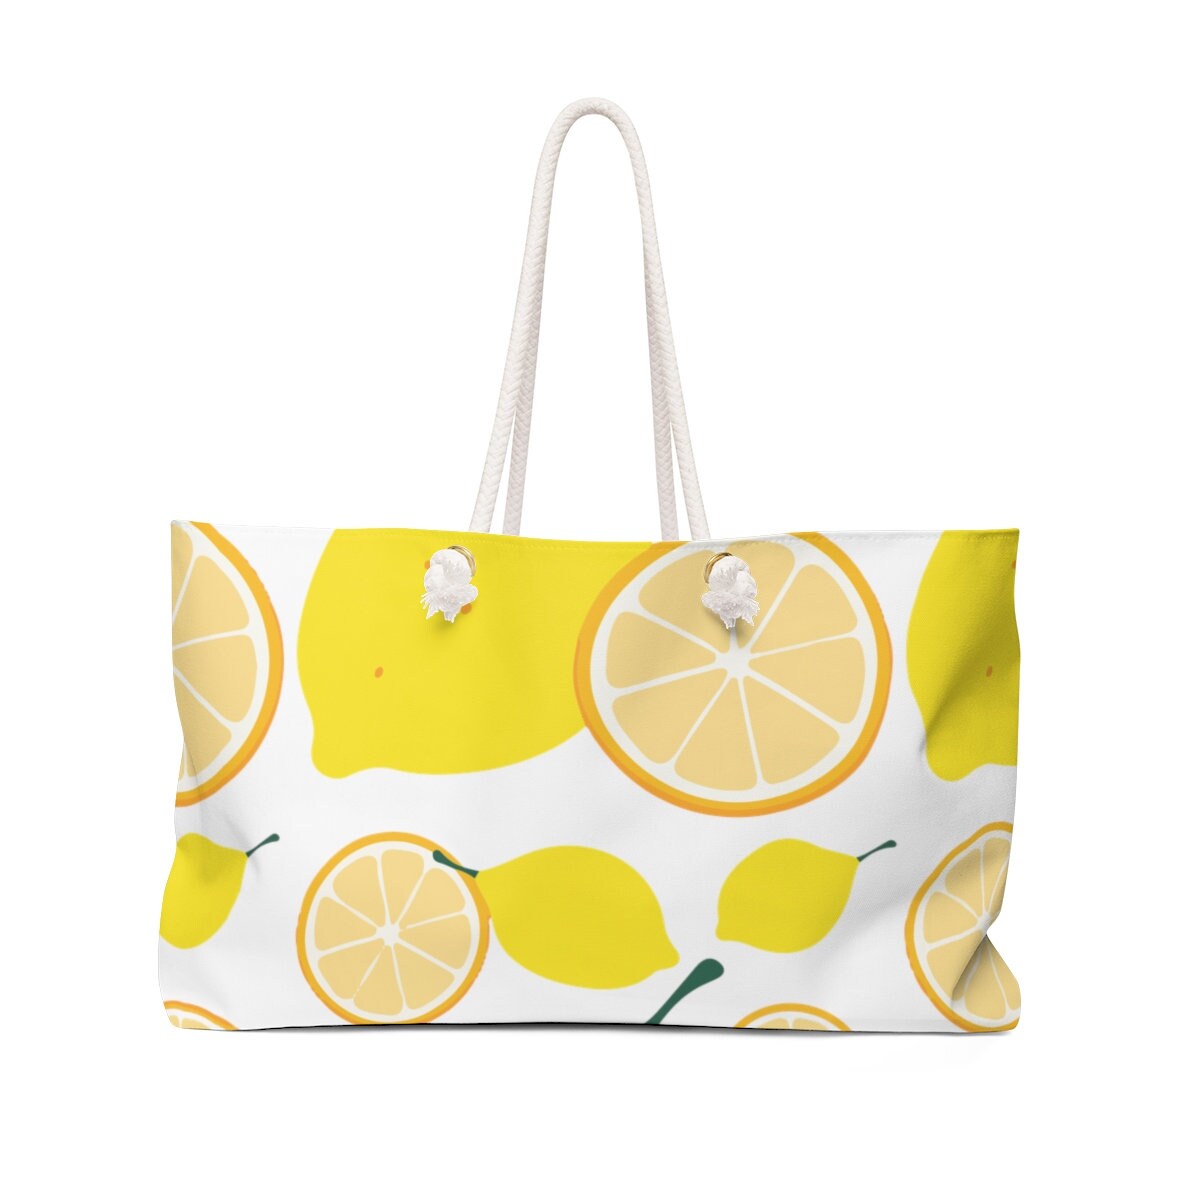 Lemon Weekender Bag, Lemon, Lemony, Tote Bags, Summer Totes, Lemon ...